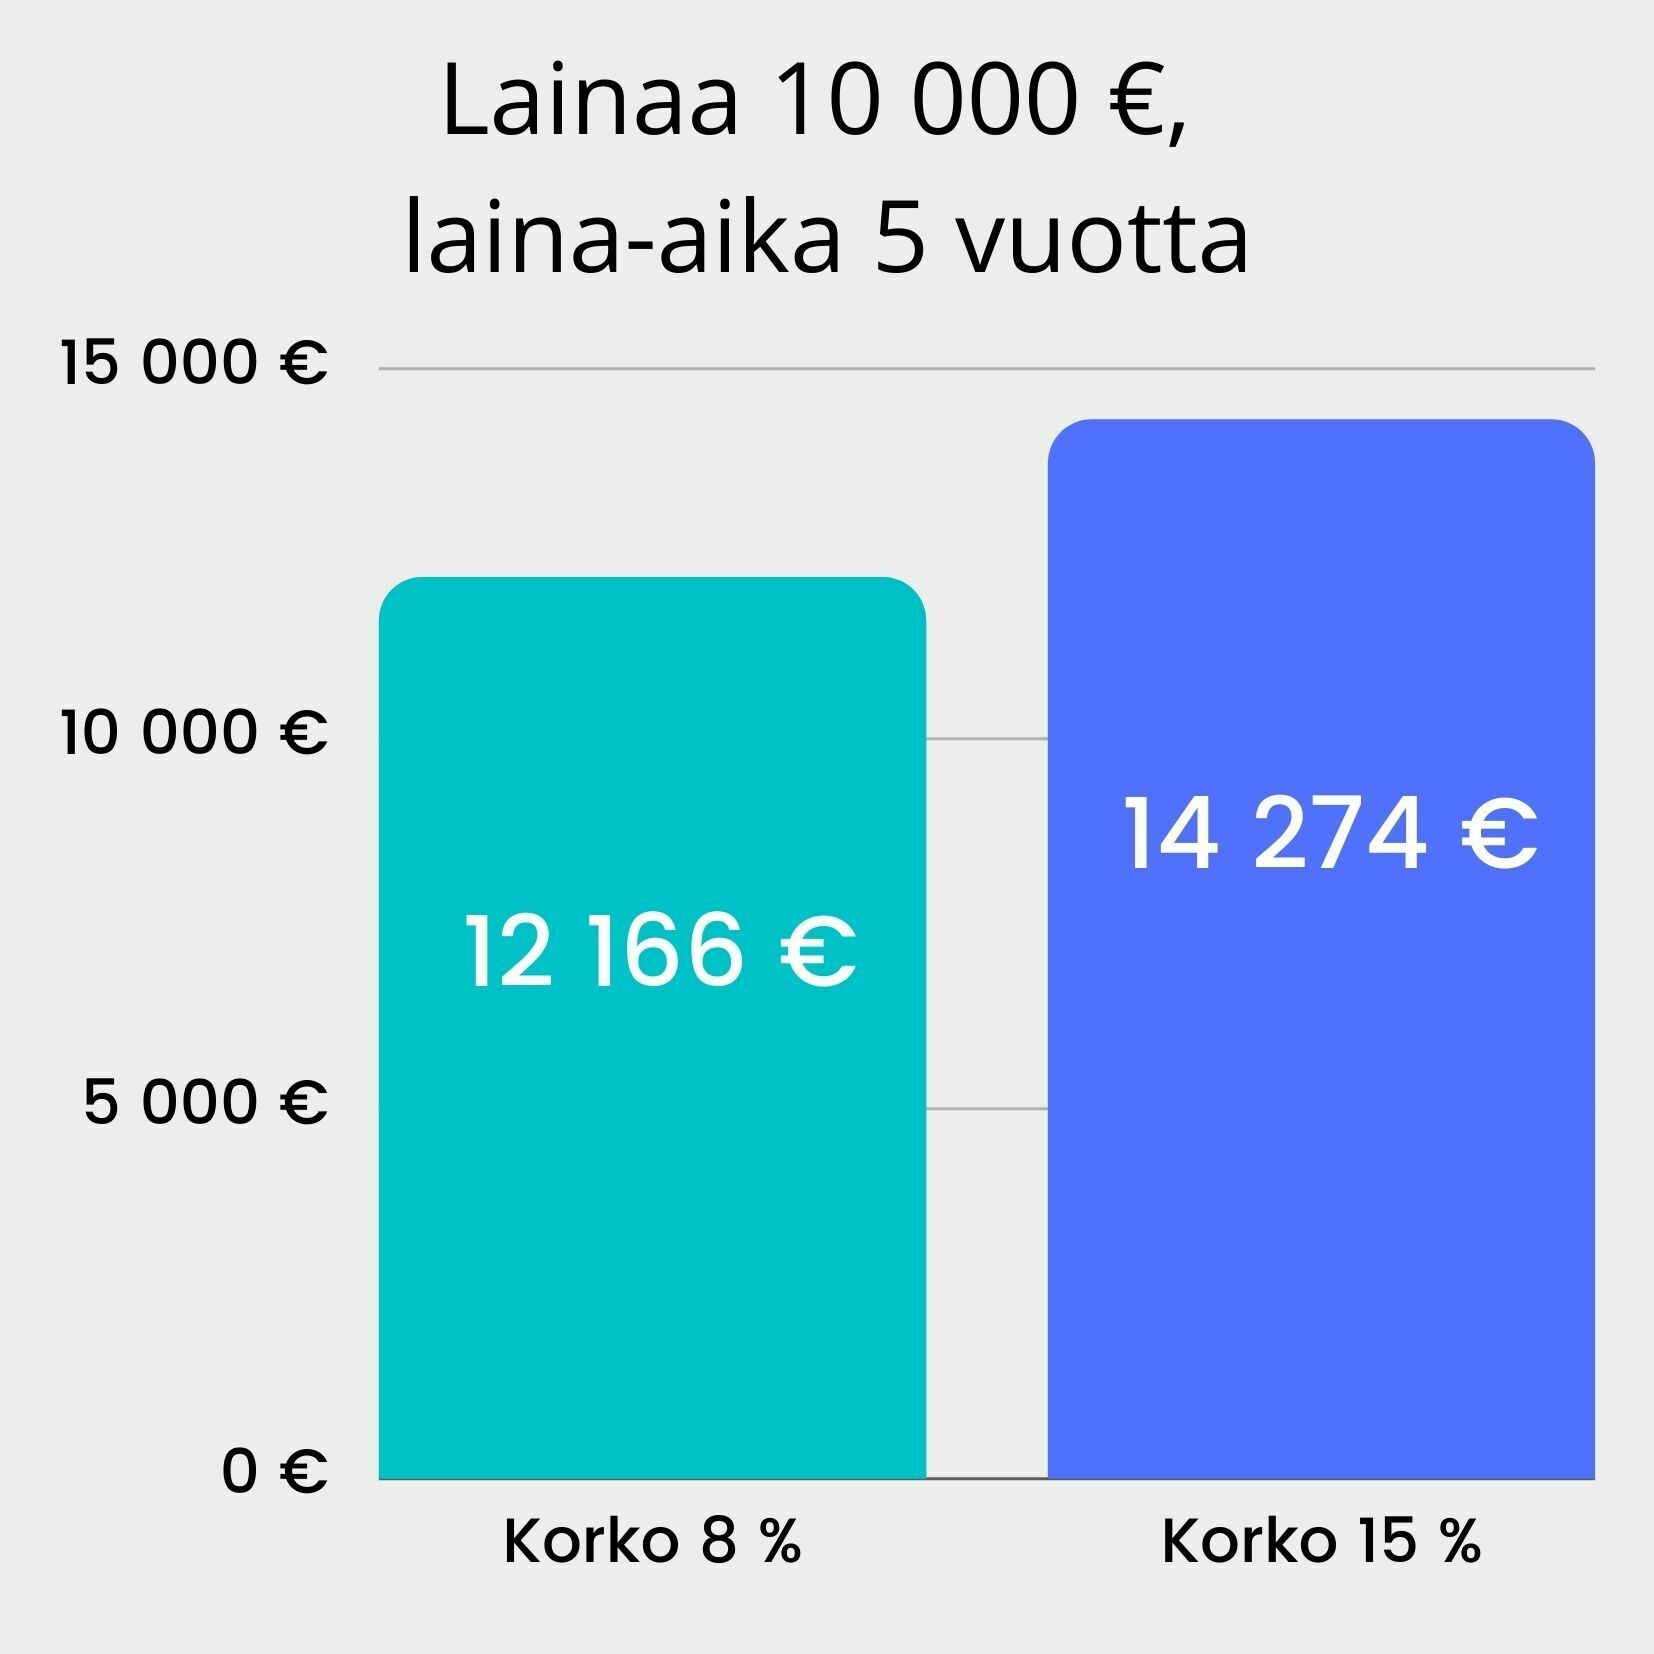 koron vaikutus 10000 euron lainan hintaan, laina-ajan ollessa 5v